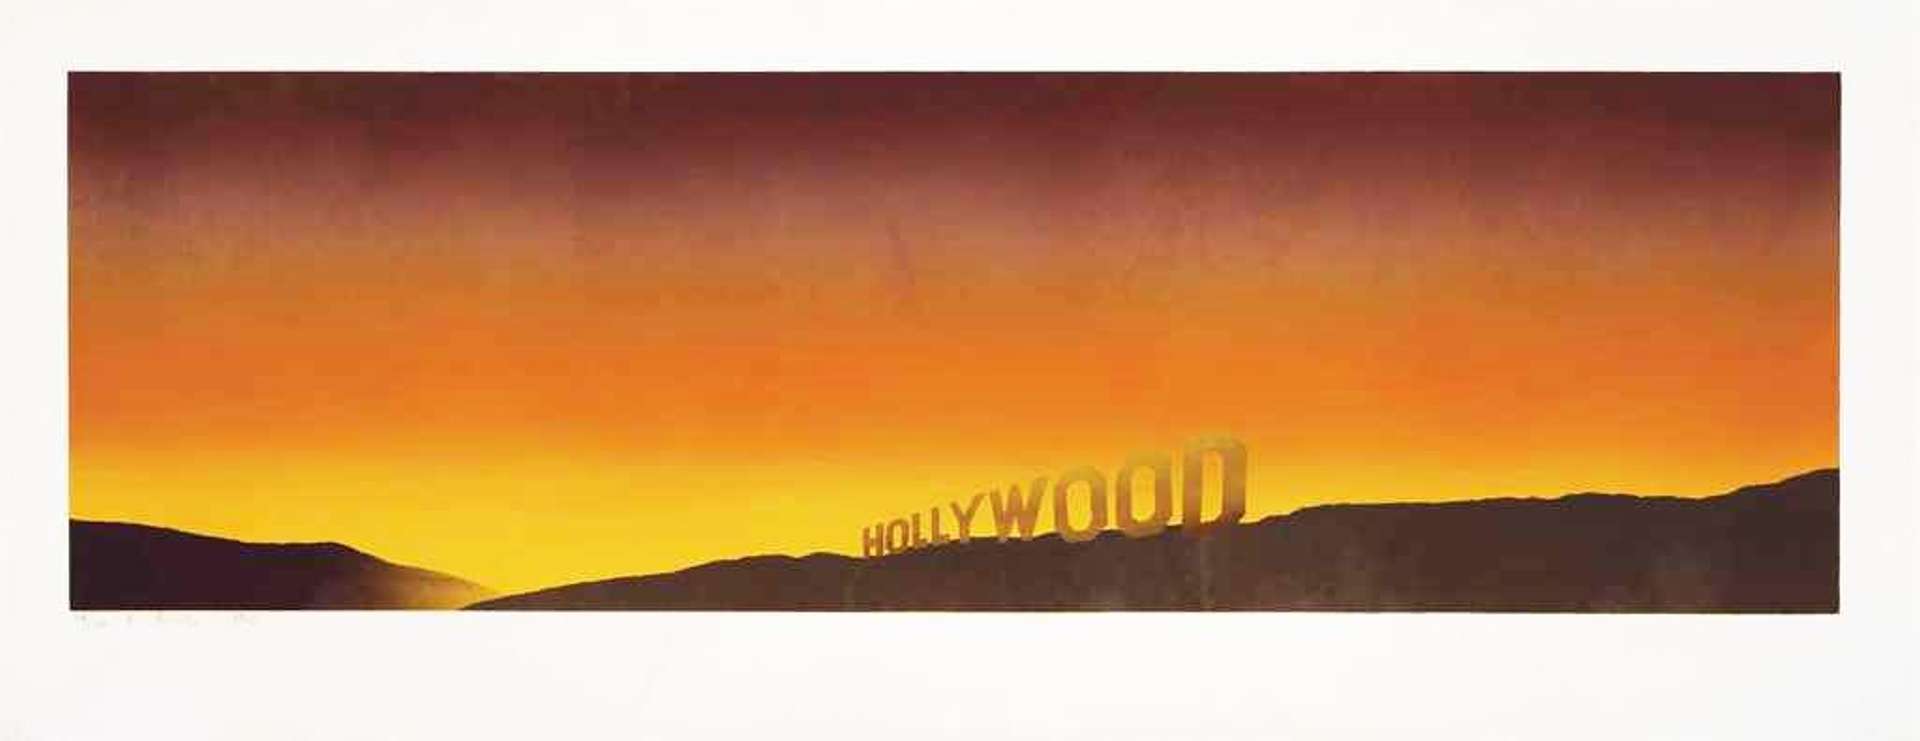 Hollywood - Signed Print by Ed Ruscha 1968 - MyArtBroker